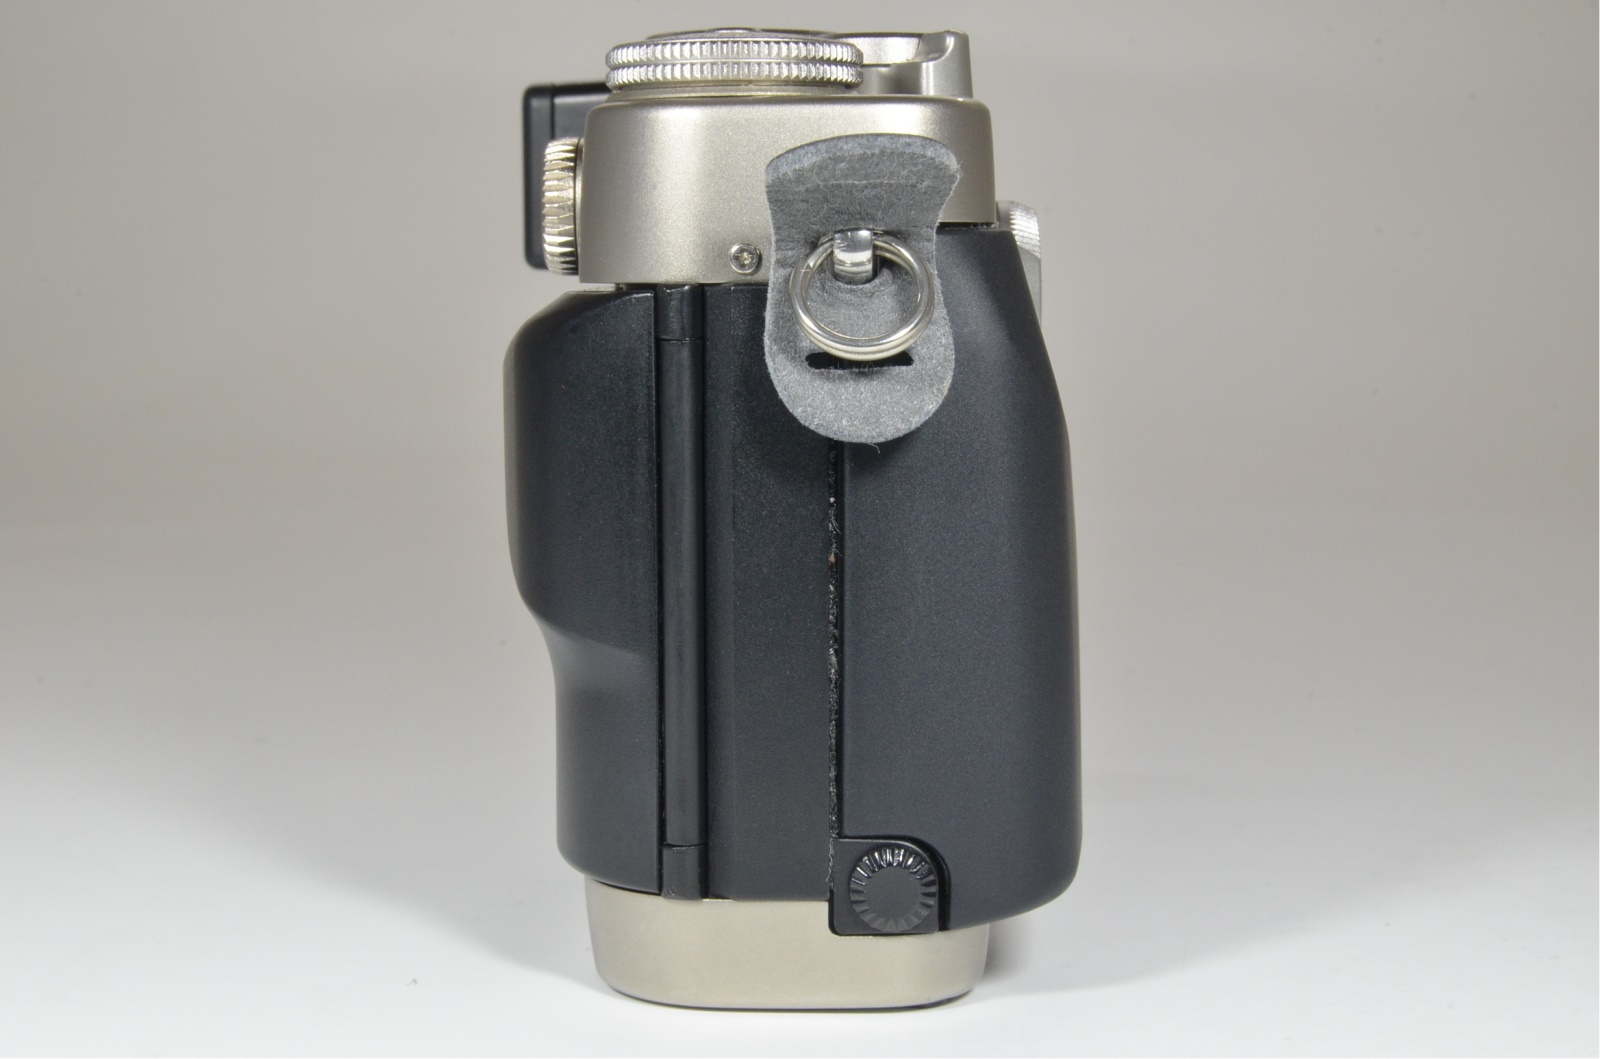 contax g2 with planar 45mm, biogon 21mm, viewfinder gf-21mm, sonnar 90mm, tla200